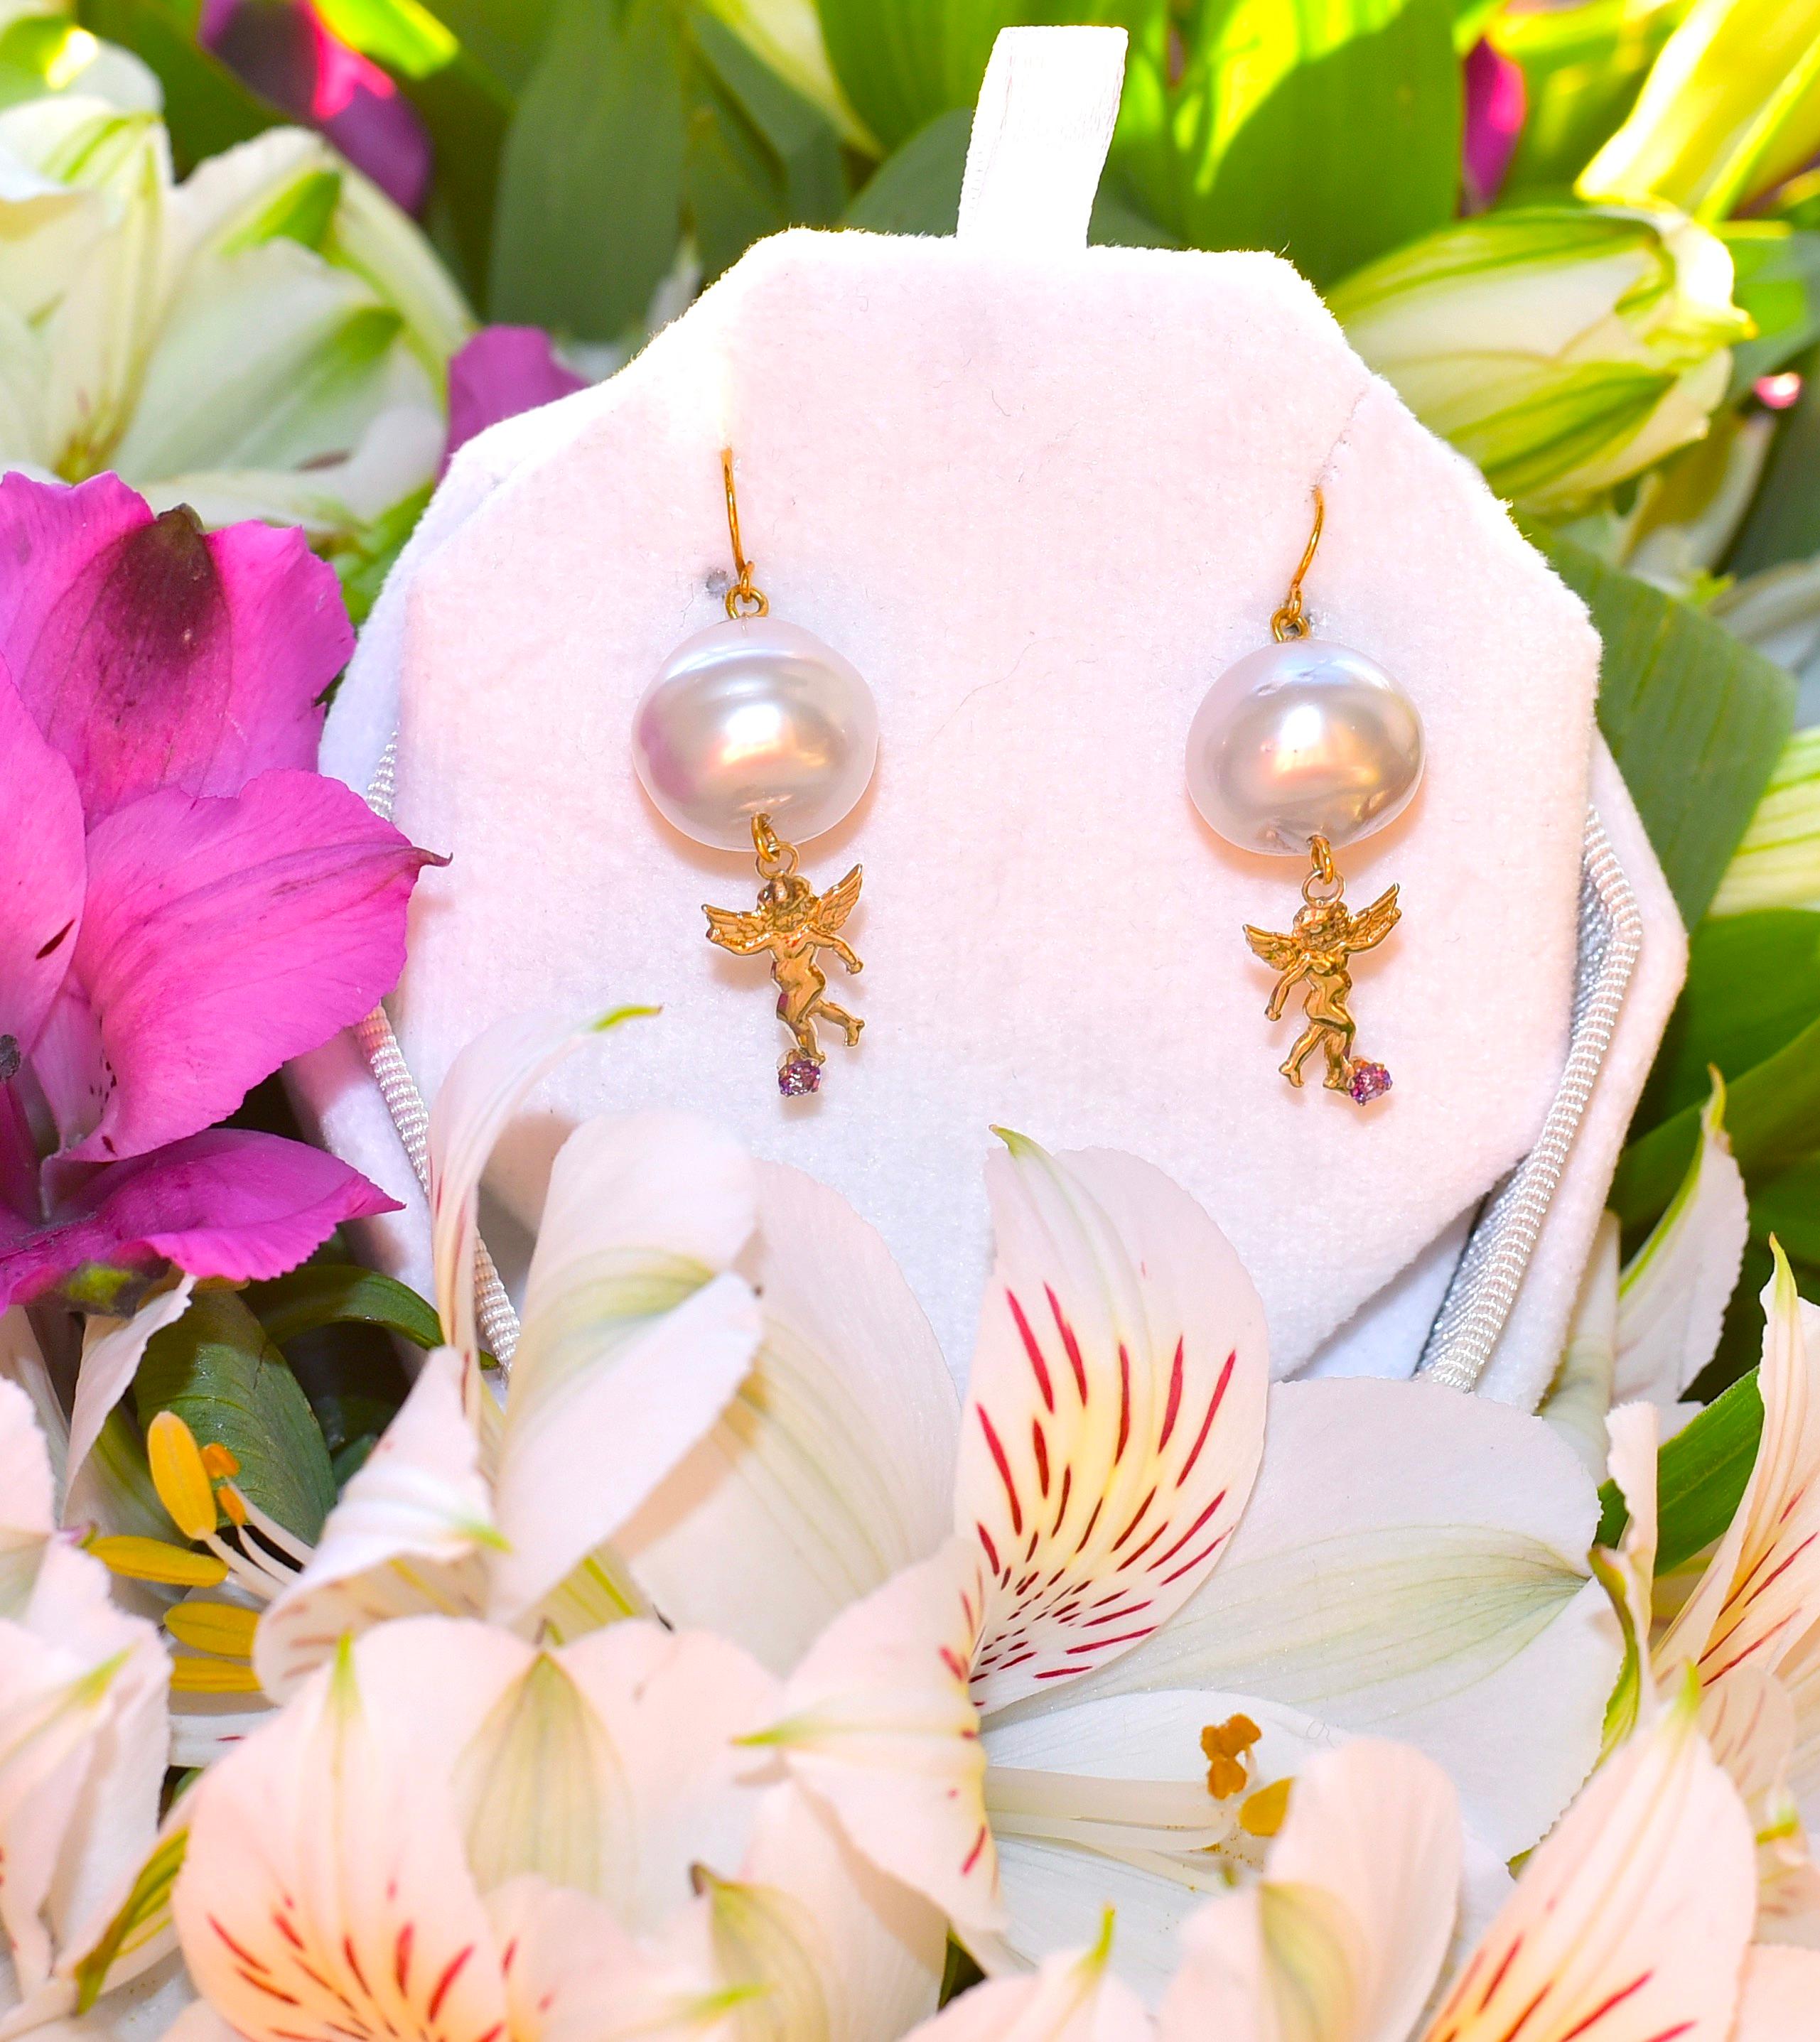 Artisan Australian Paspaley Cultured Pearl earrings, 14K Yellow Gold Angel with Amethyst